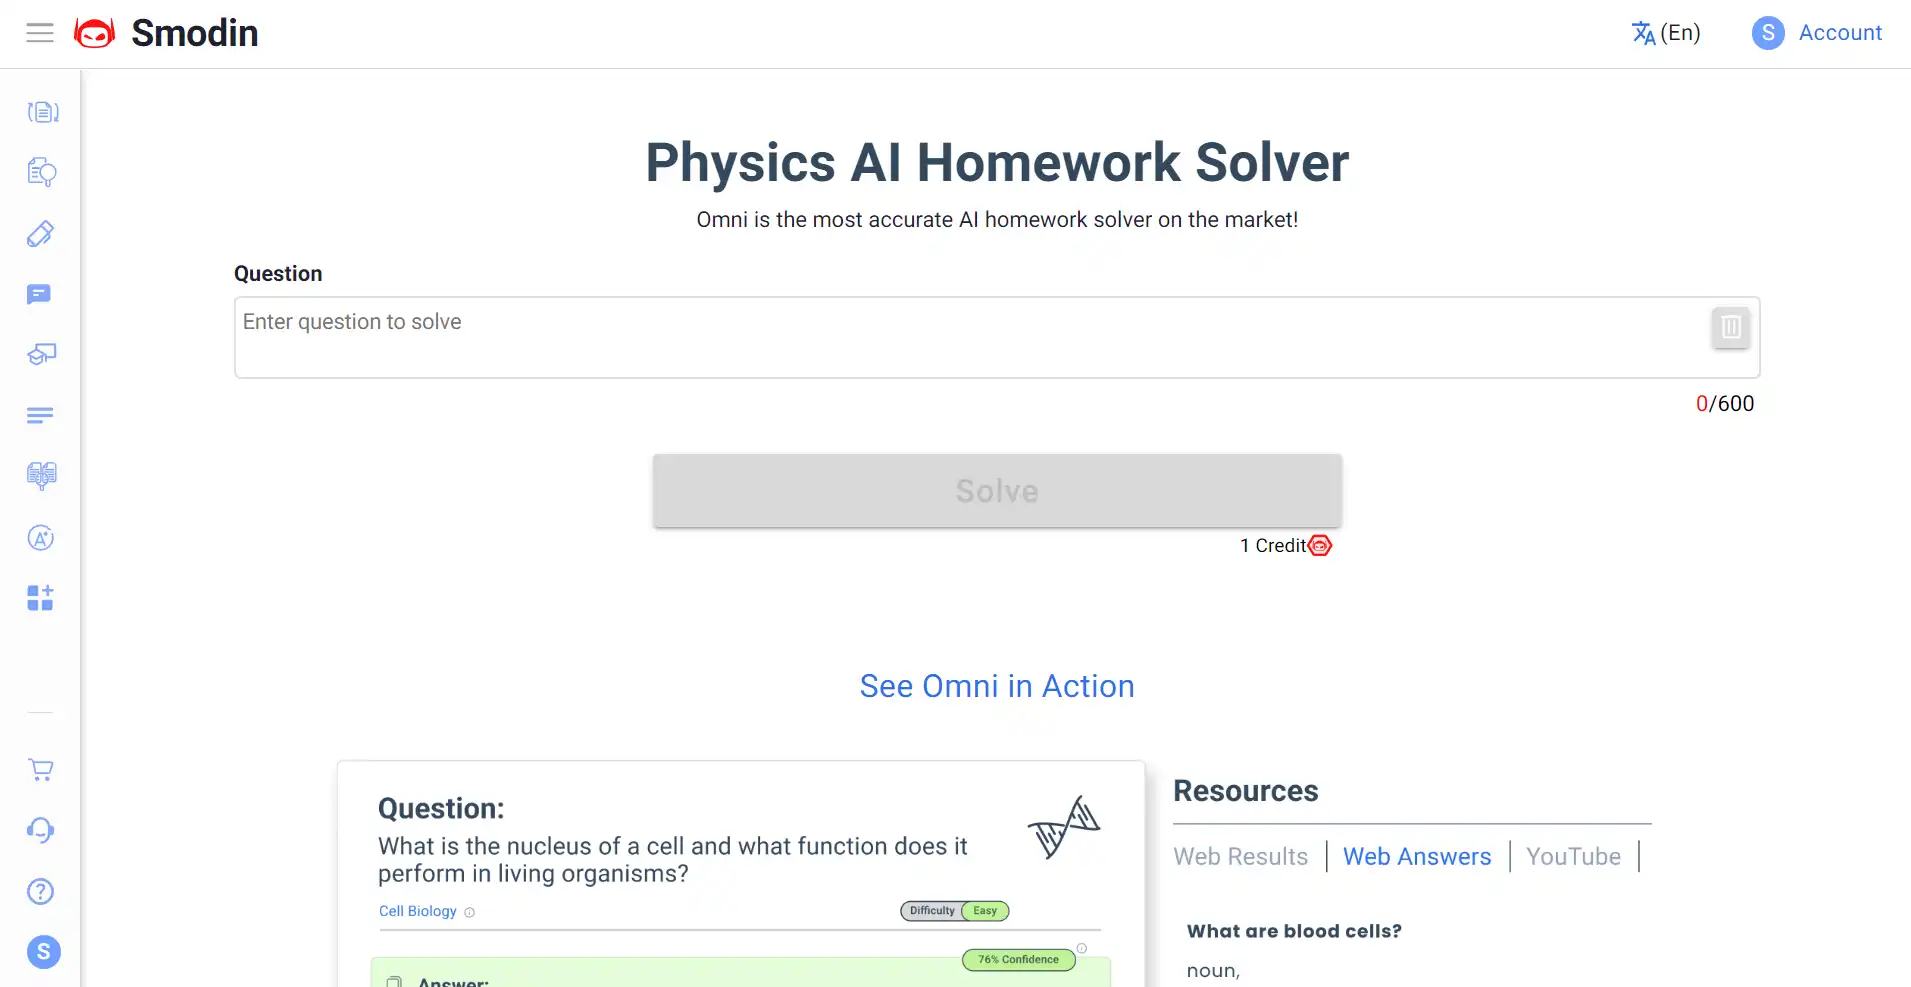 Smodin Physics AI Homework Solver - AI untuk mengerjakan tugas fisika